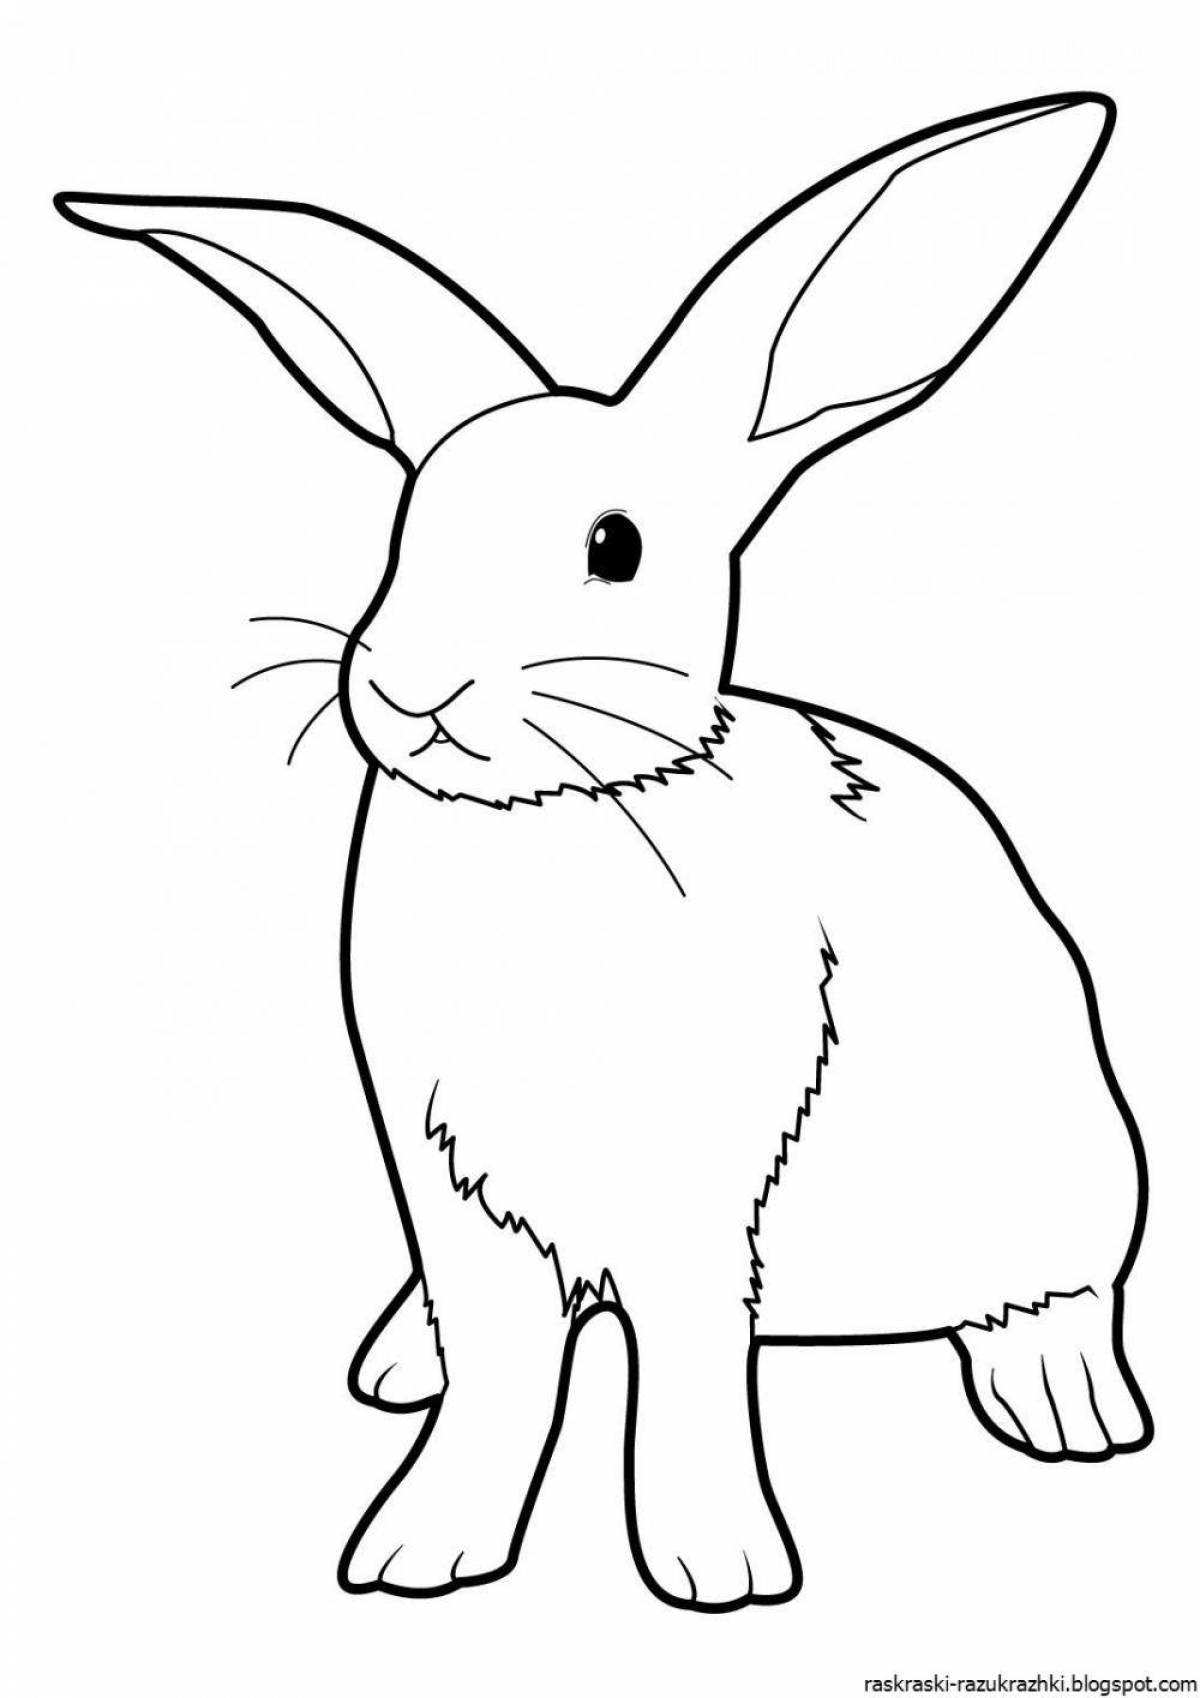 Cartoon rabbit on floppy disk